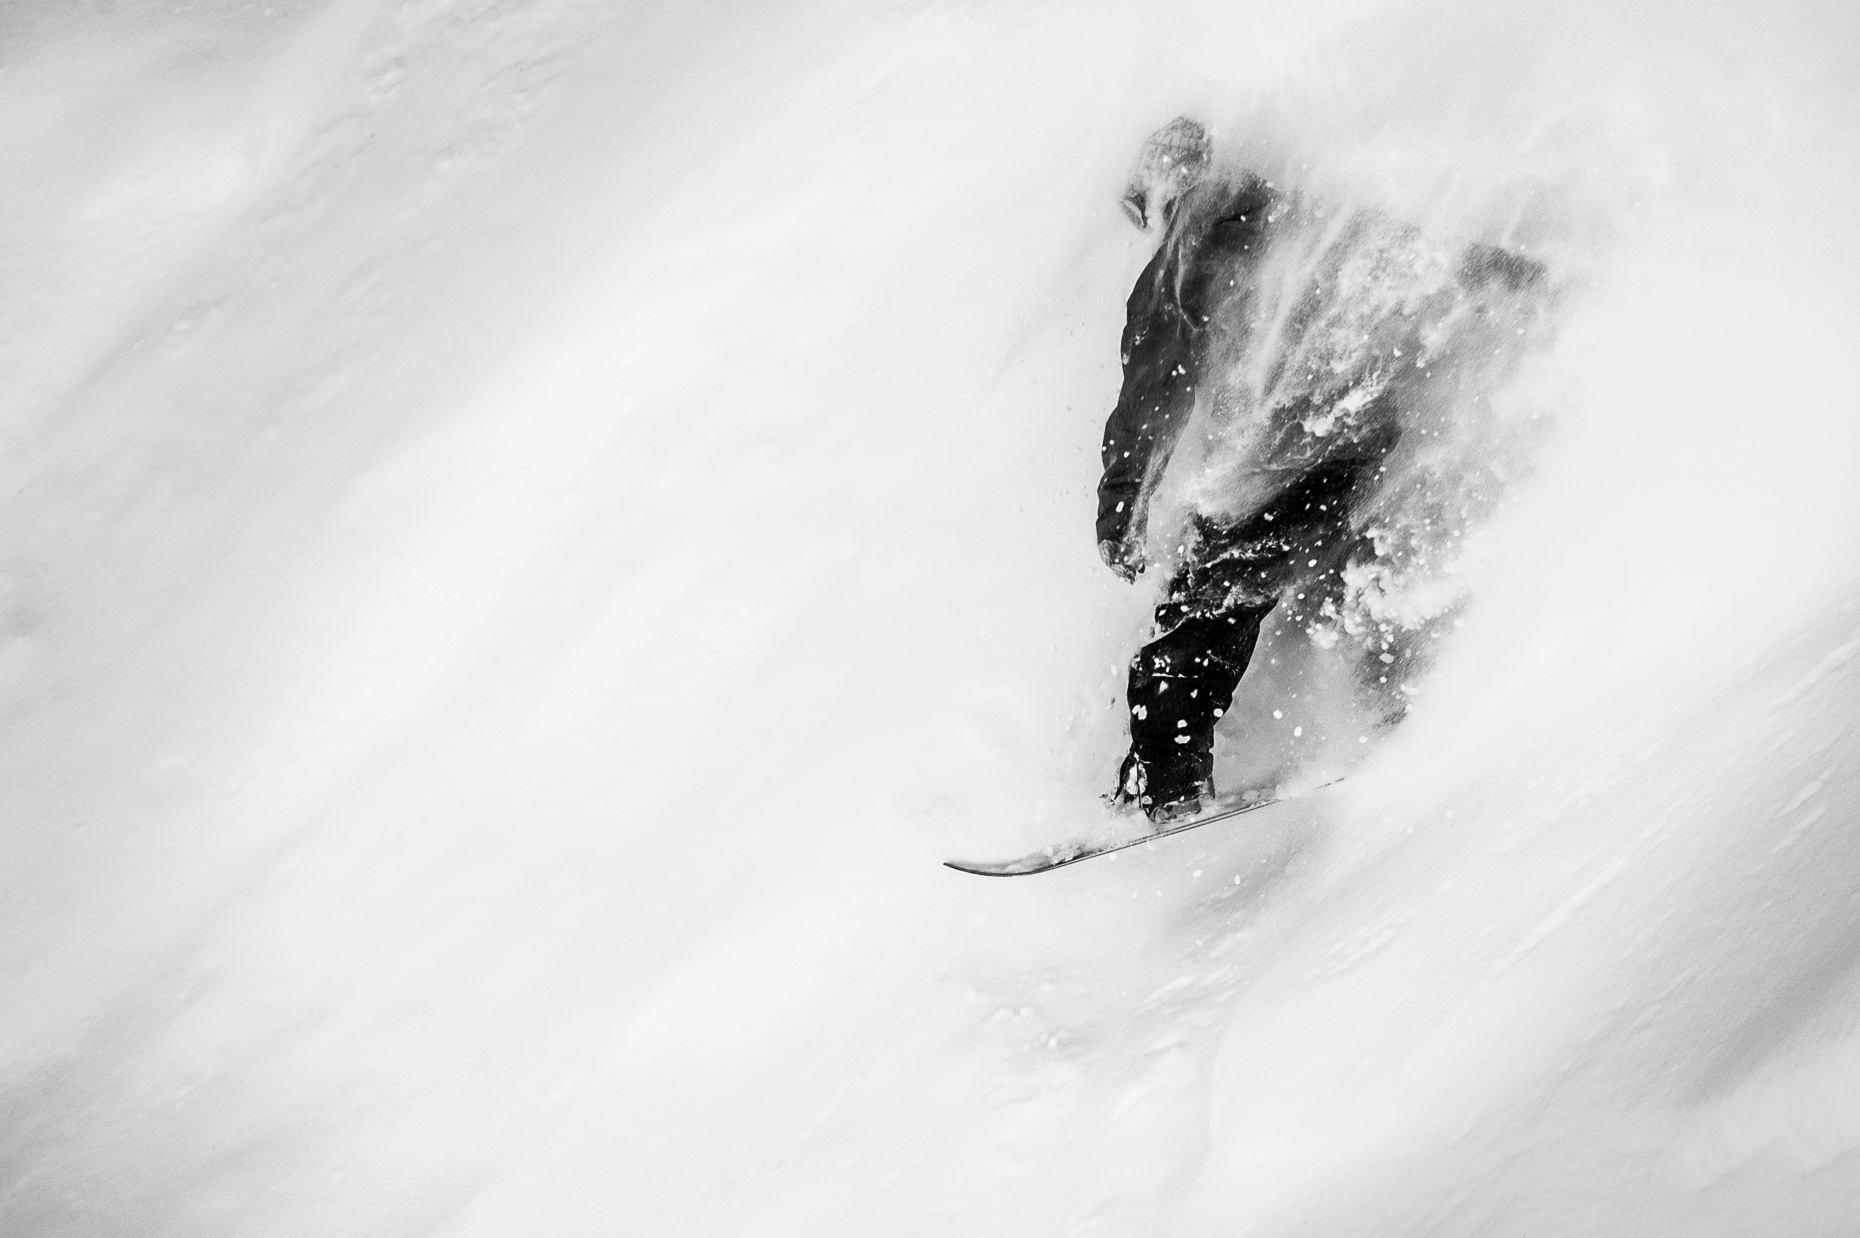 snowboarding__CBP8261.jpg